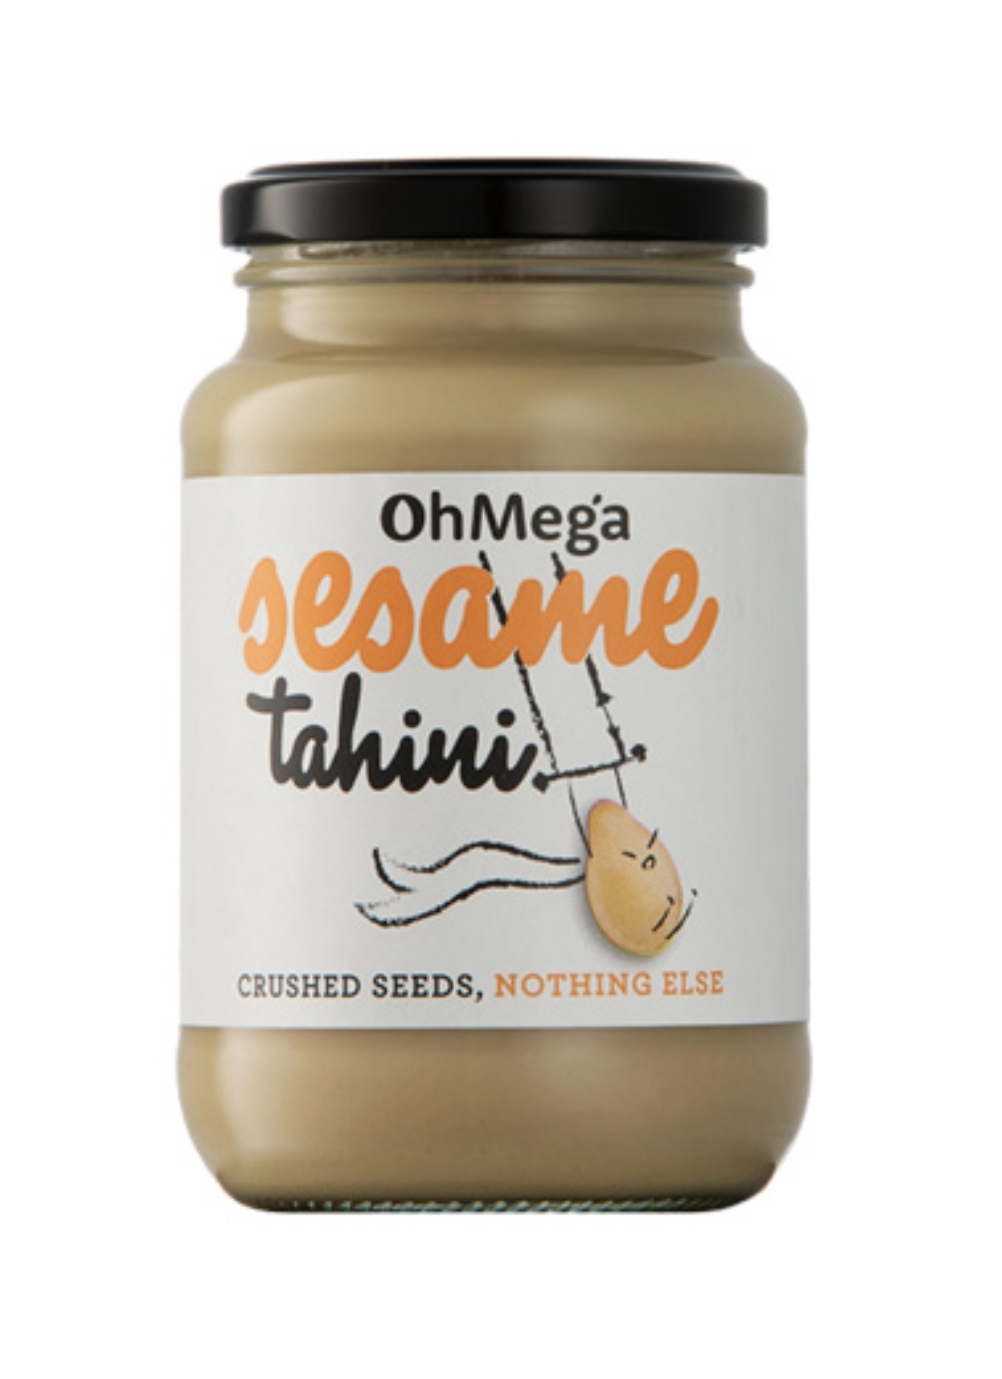 Oh Mega Sesame Tahini crushed seeds butter - 400g